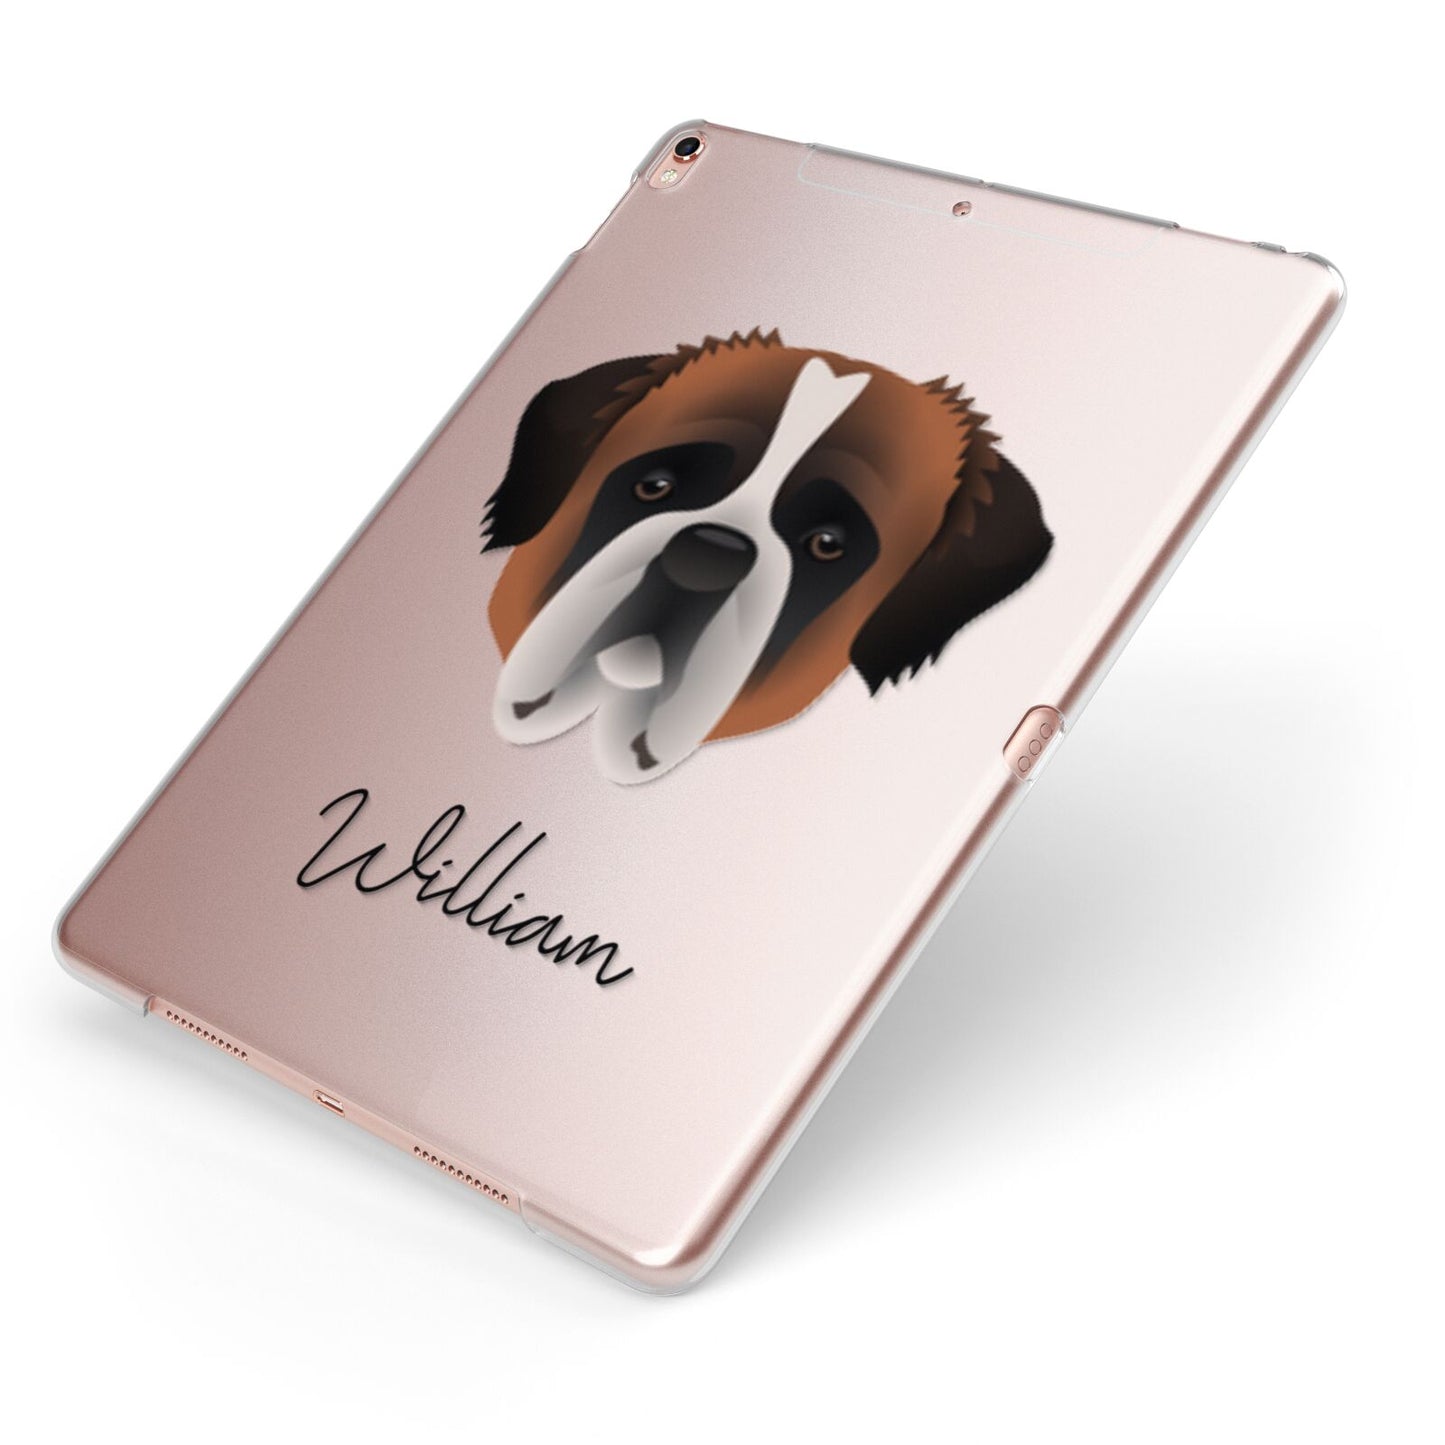 St Bernard Personalised Apple iPad Case on Rose Gold iPad Side View